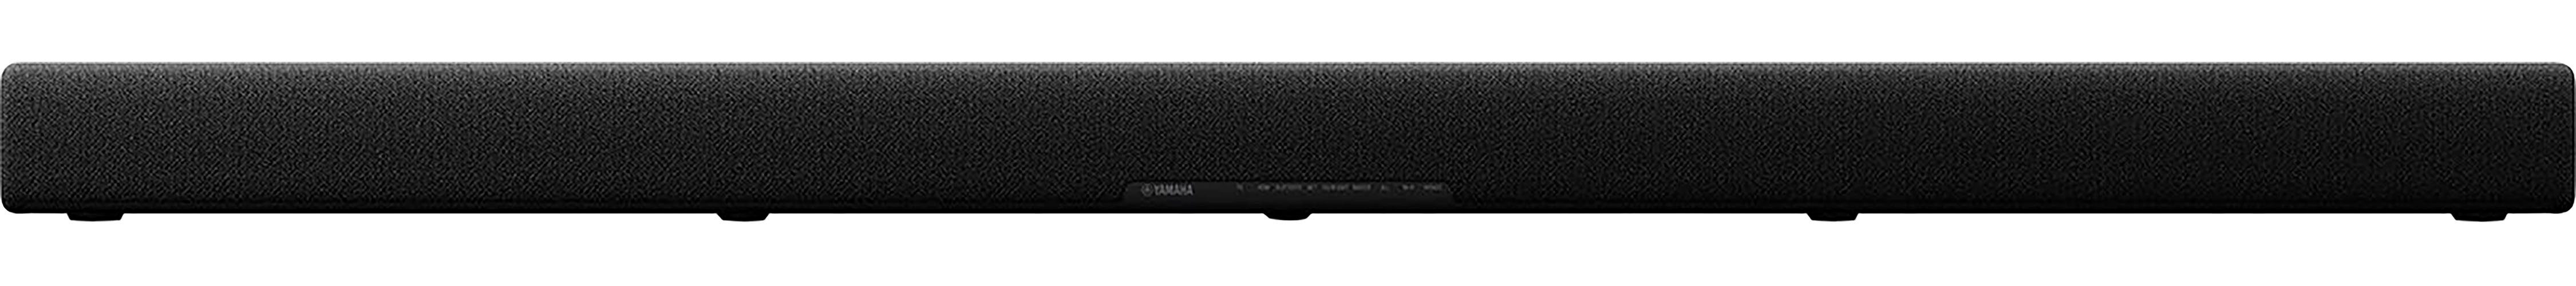 Yamaha TRUE X WLAN Stereo Soundbar W, (WiFi), BAR integriertem 40A (Bluetooth, 180 Subwoofer) schwarz mit